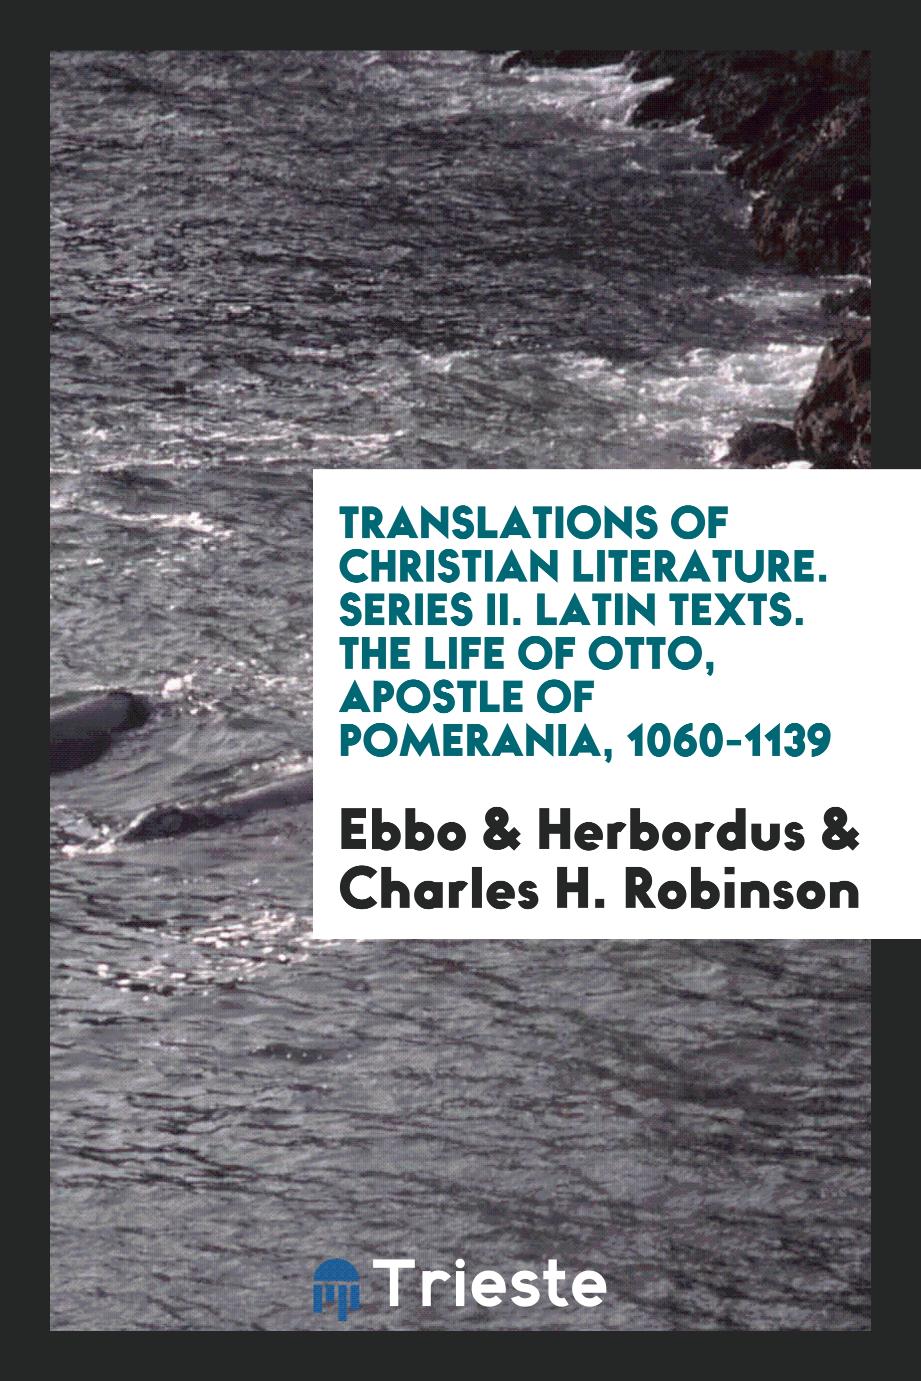 Translations of christian literature. Series II. Latin Texts. The life of Otto, apostle of Pomerania, 1060-1139